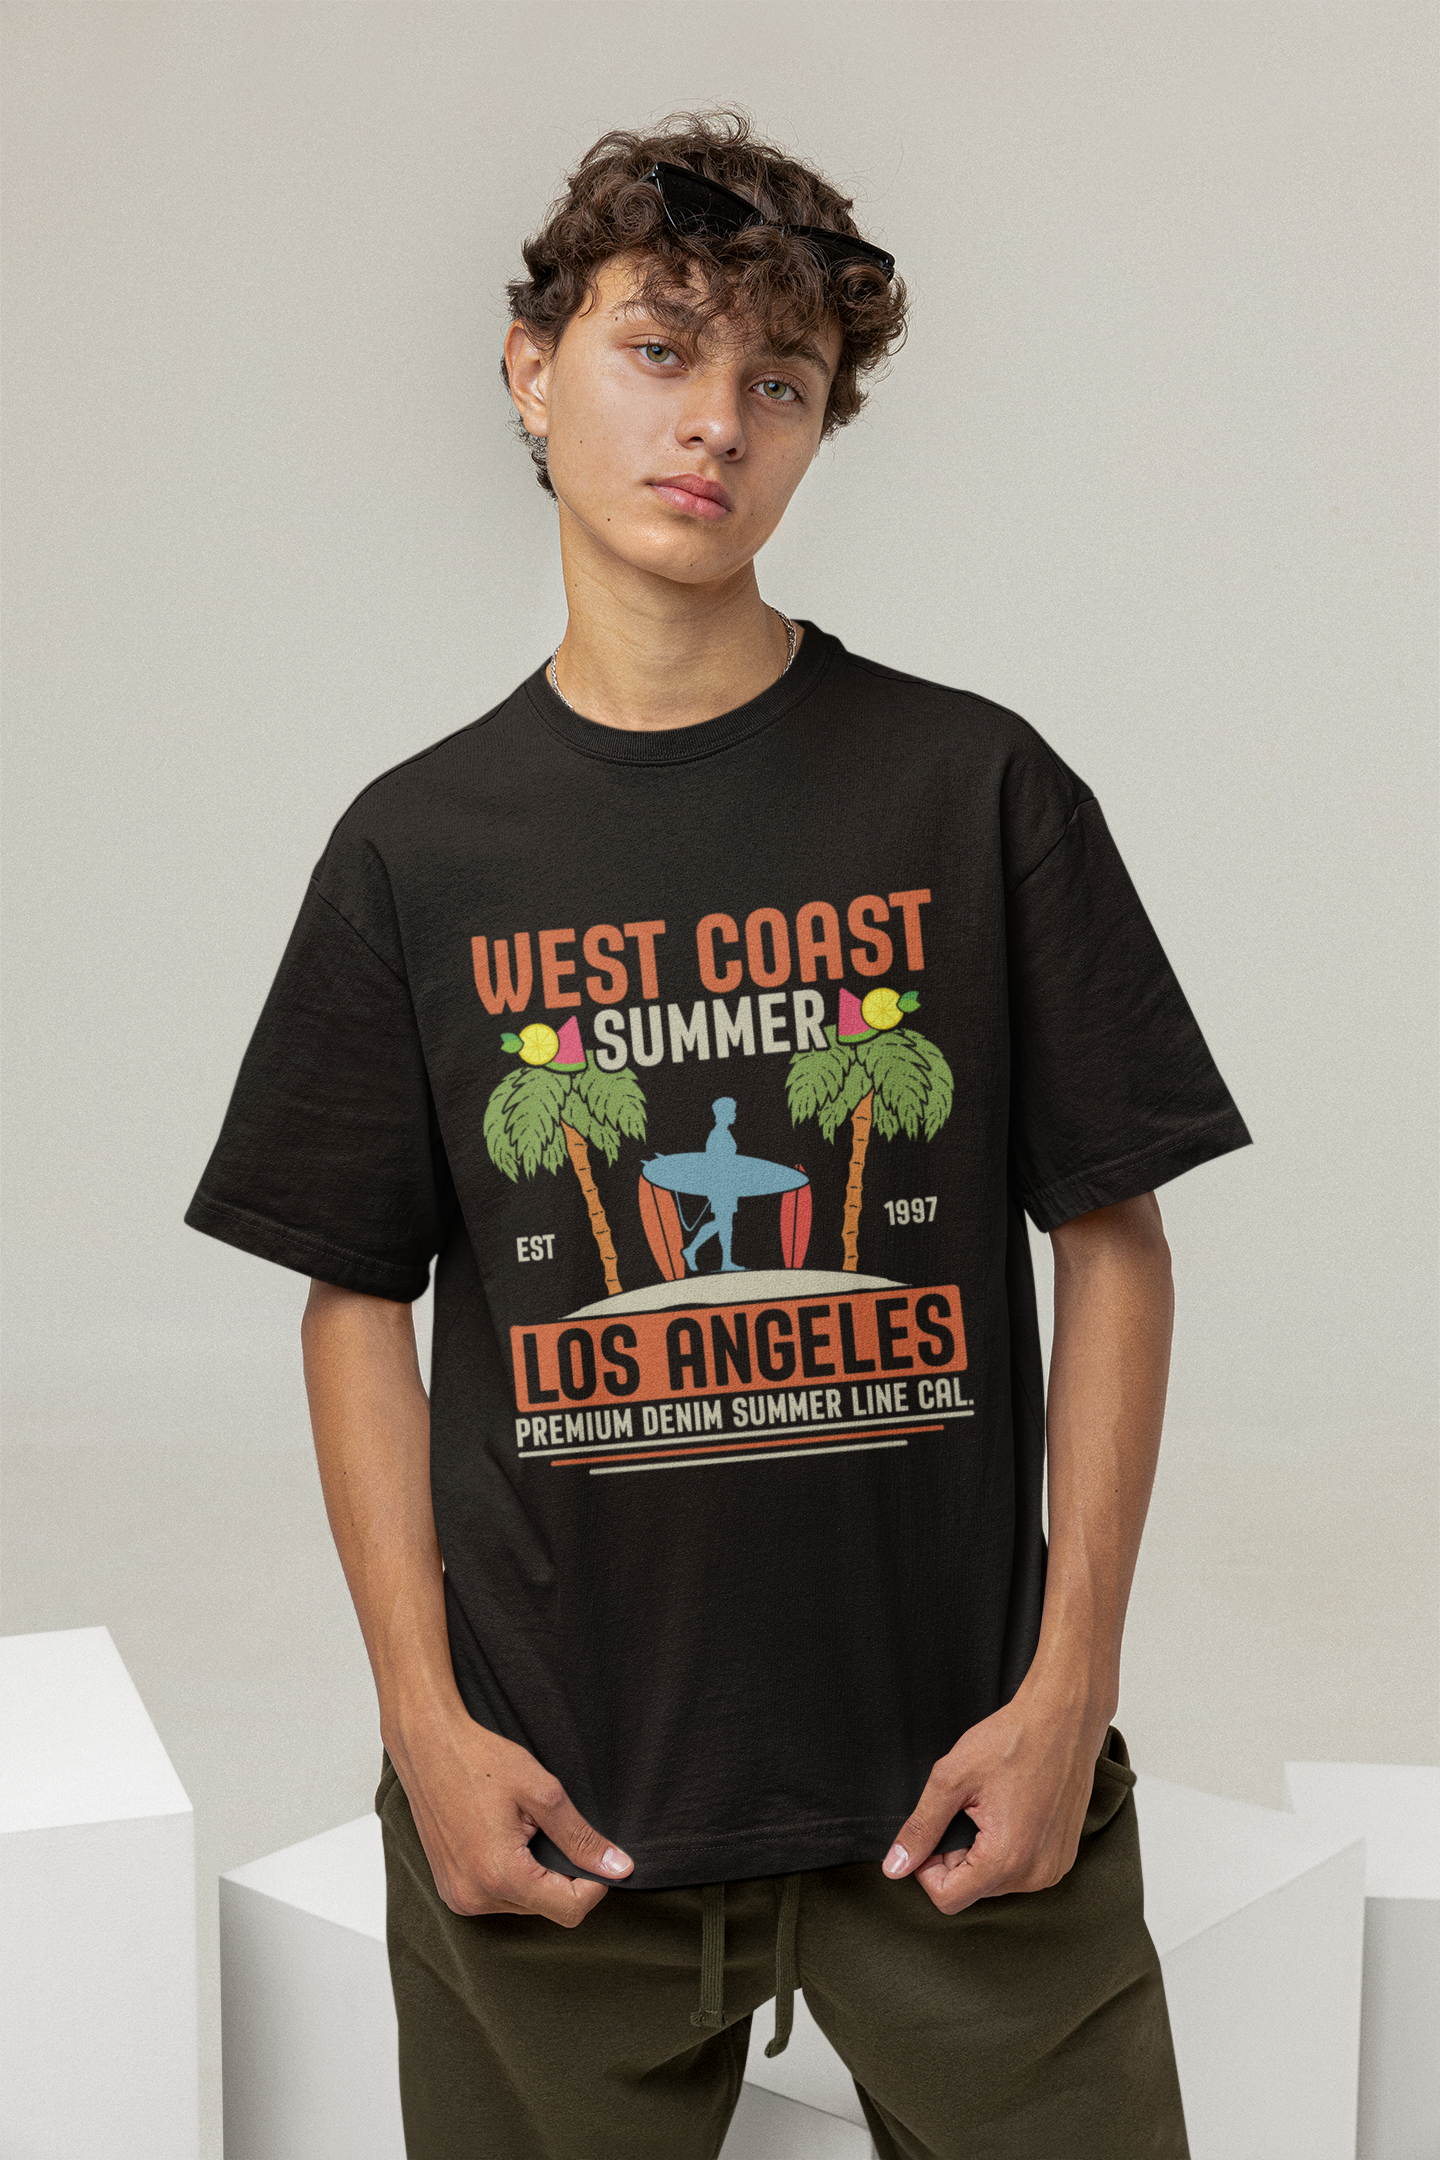 "West Coast Summer" Vintage Shirt